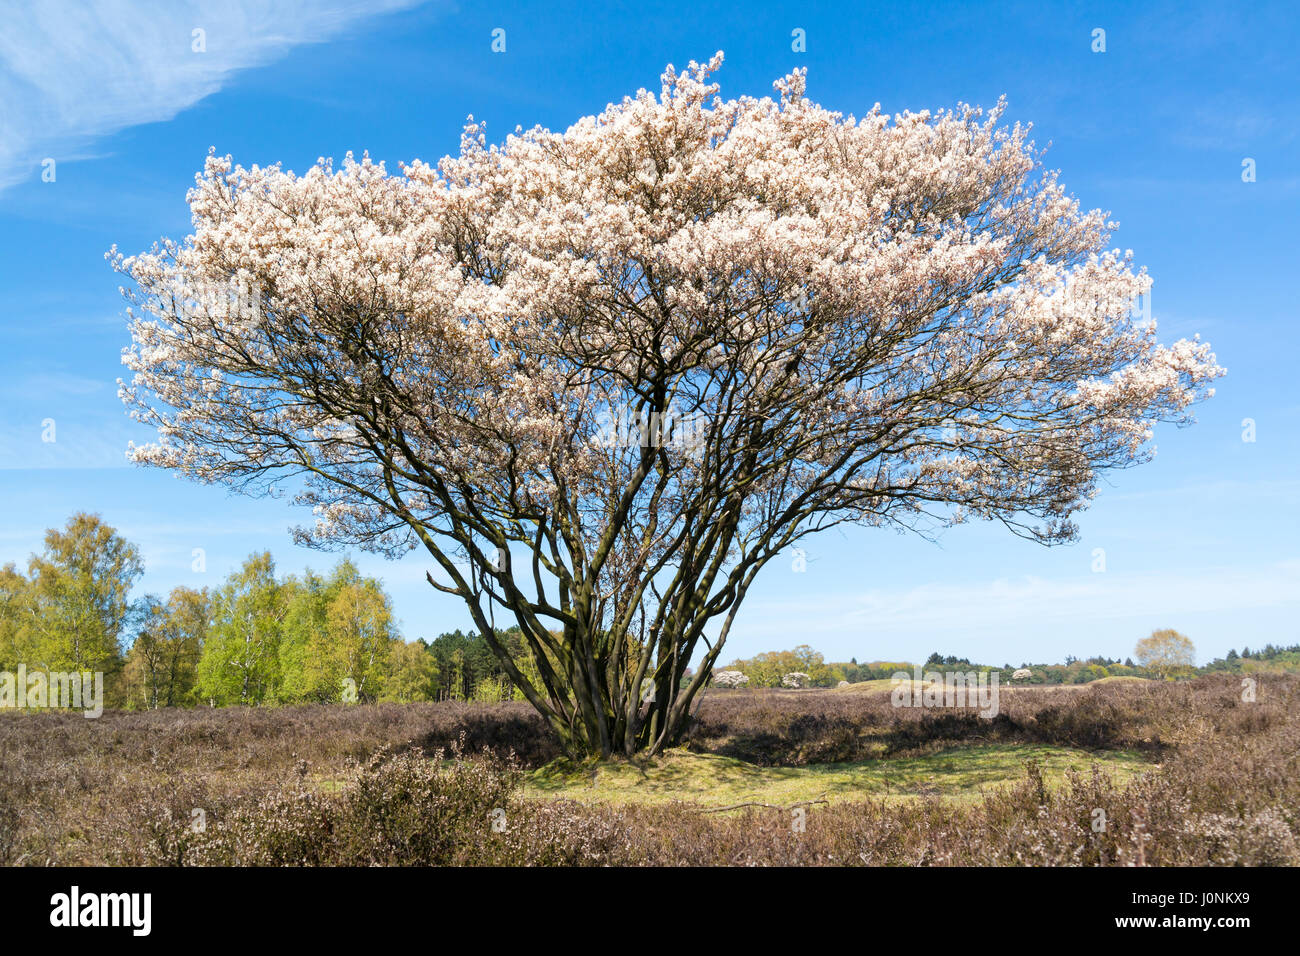 Blooming Amelanchier lamarkii tree with white flowers in spring, heathland near Hilversum, Netherlands Stock Photo